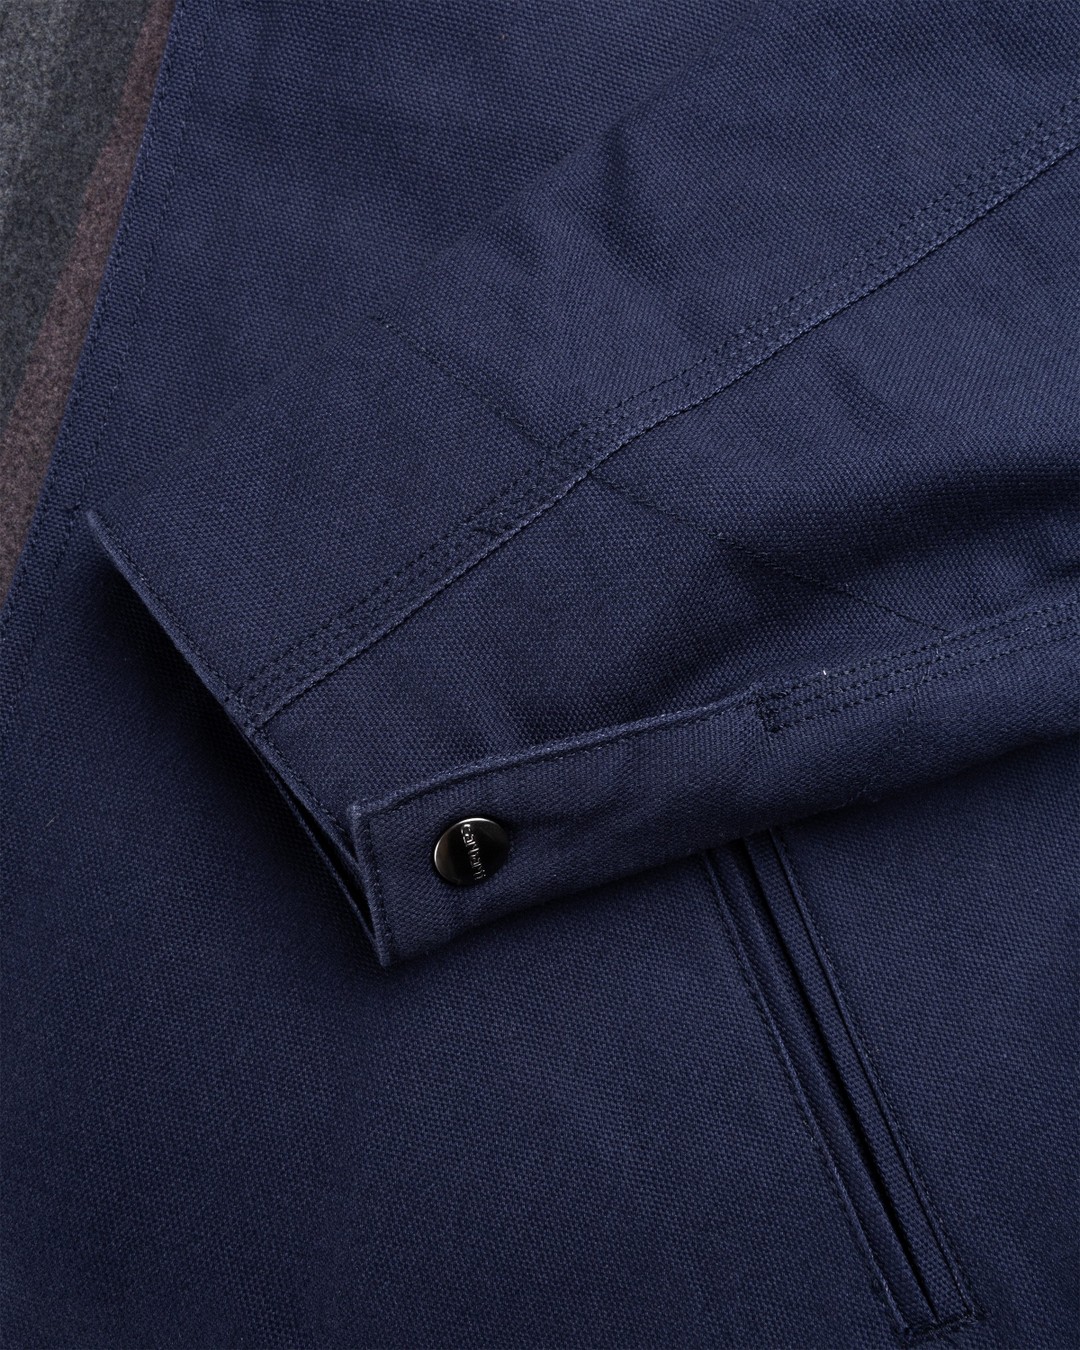 Carhartt WIP – Detroit Jacket Blue/Black - Outerwear - Blue - Image 6